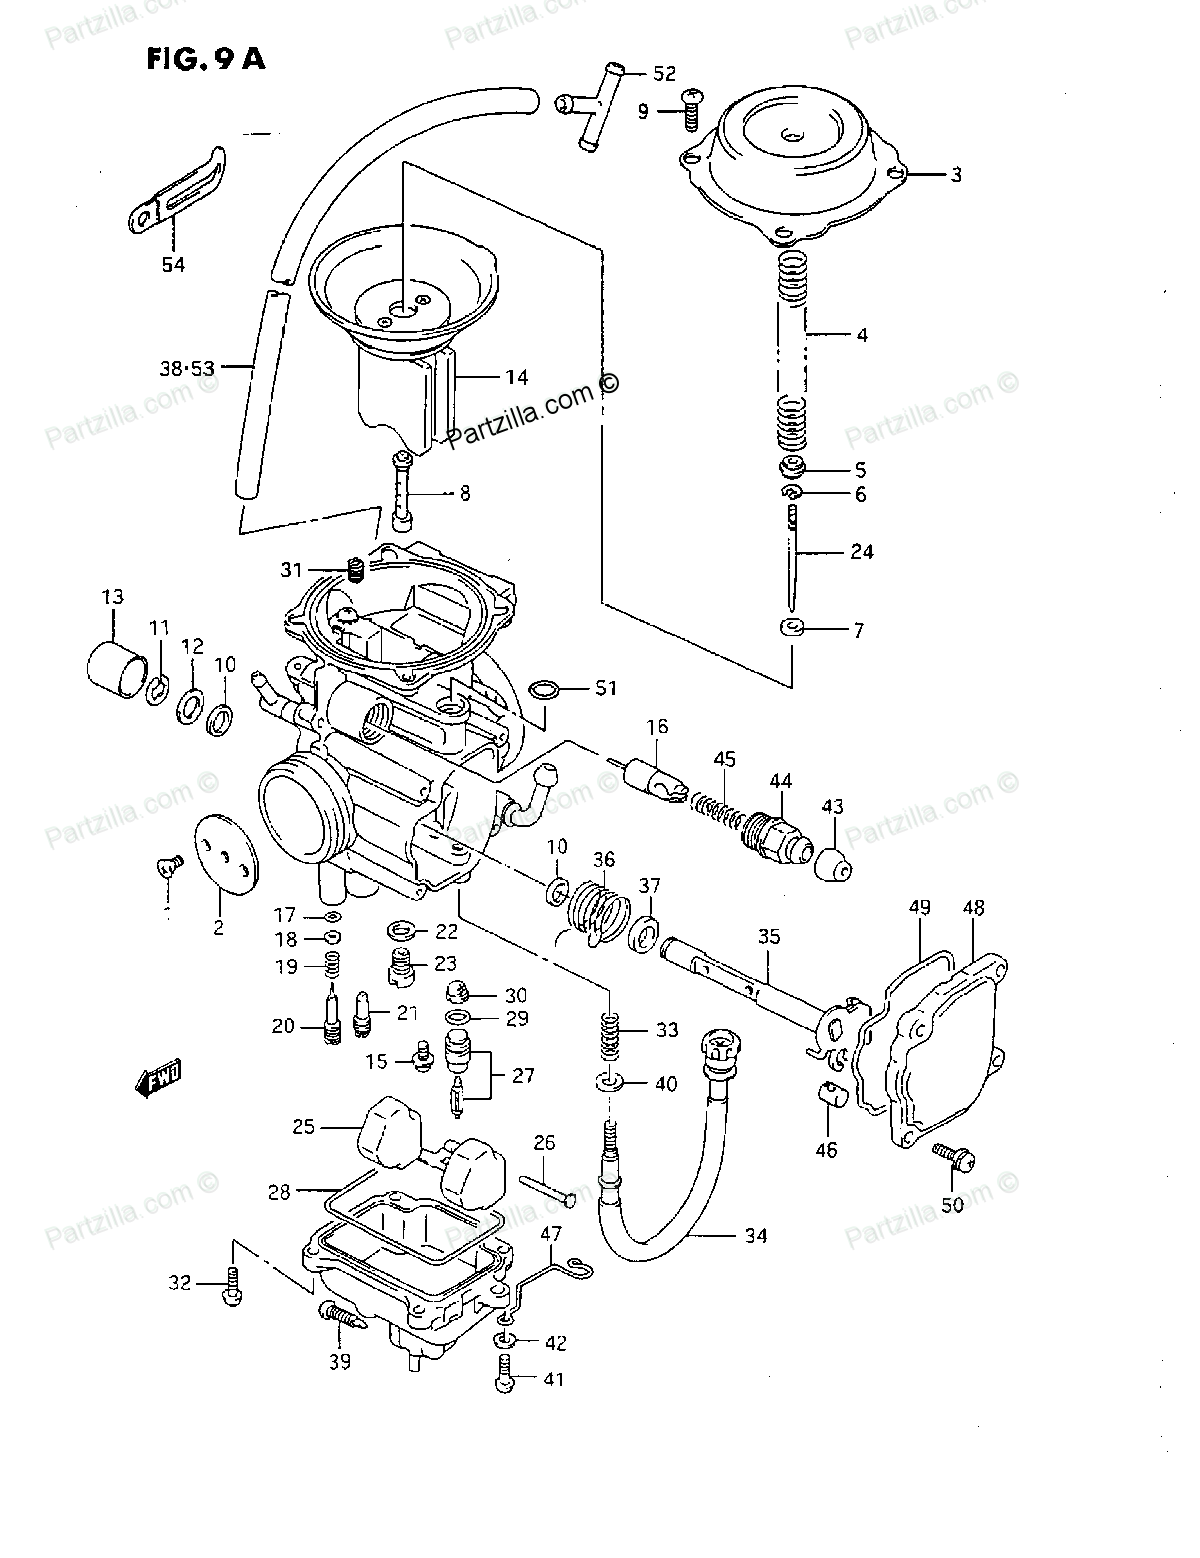 Suzuki Katana 600 Wiring Diagram - Wiring Diagram Pictures